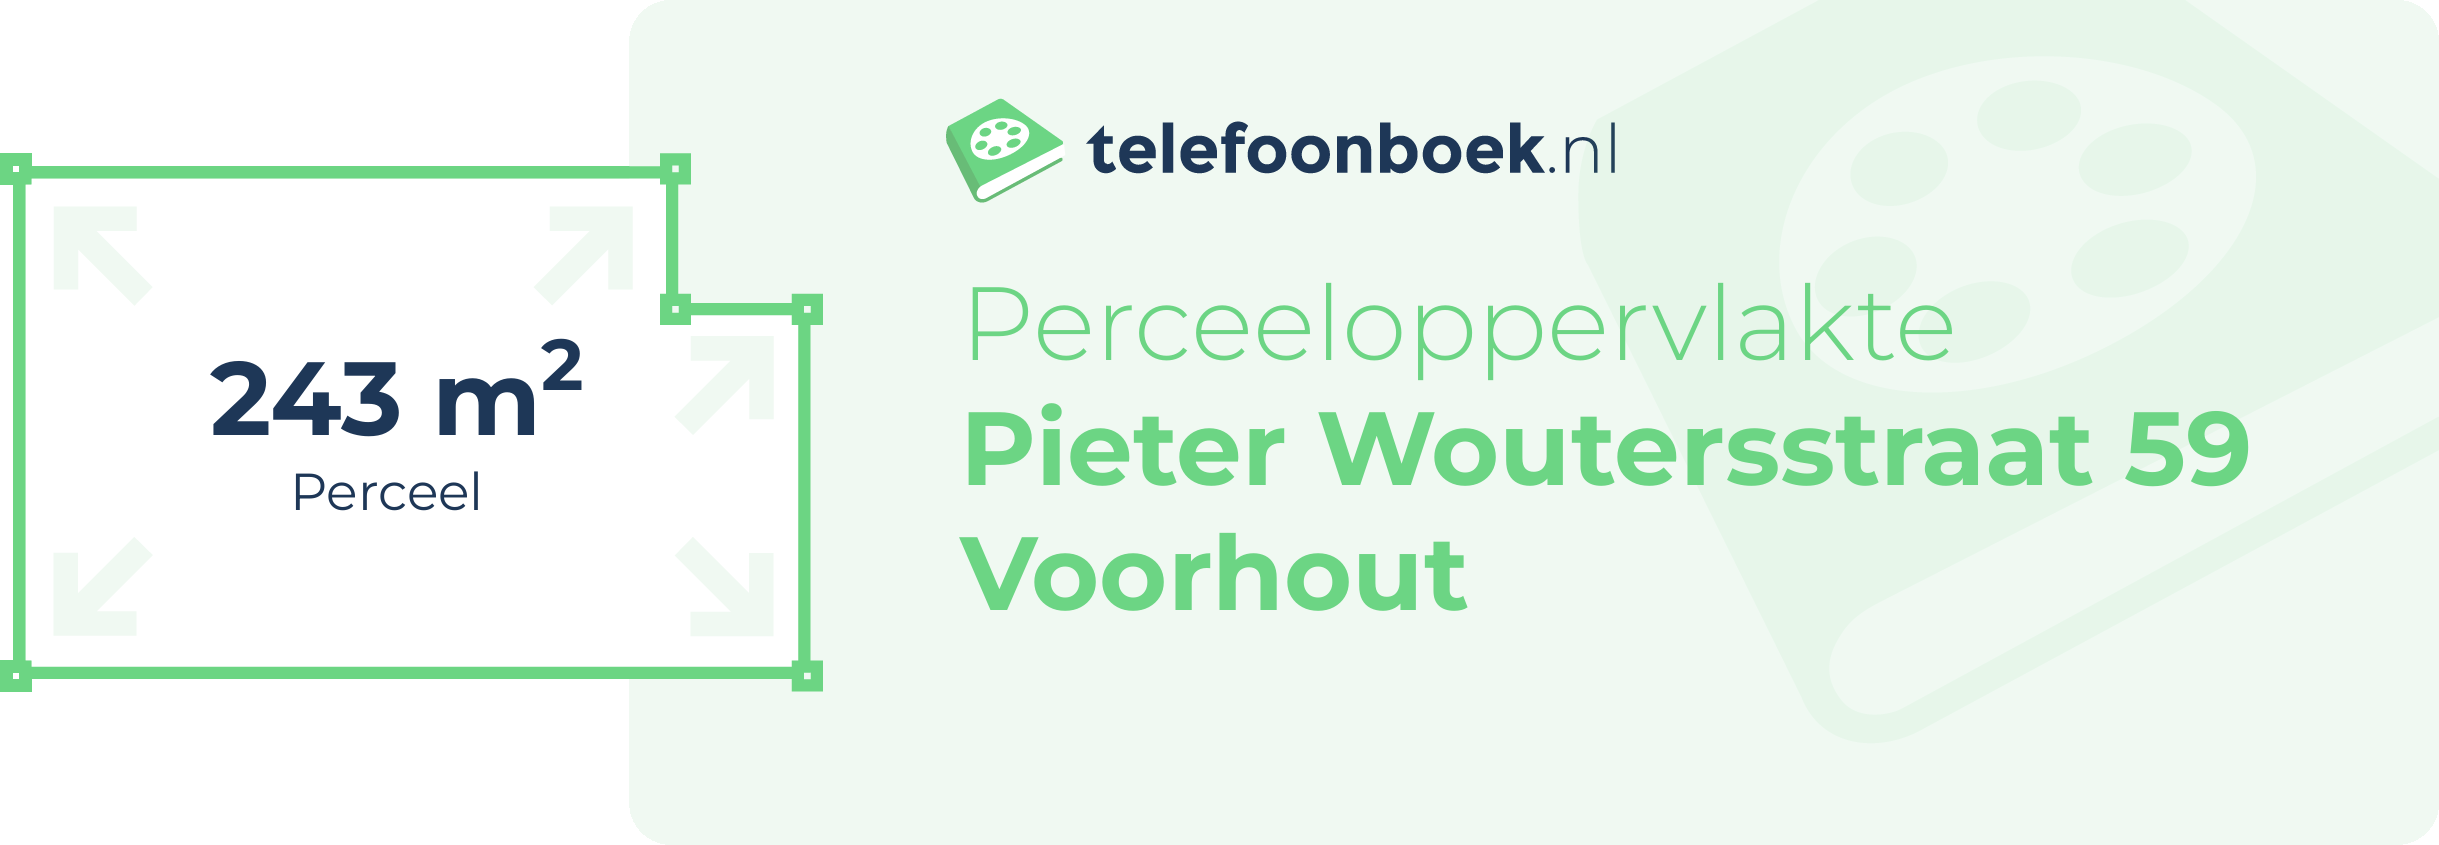 Perceeloppervlakte Pieter Woutersstraat 59 Voorhout